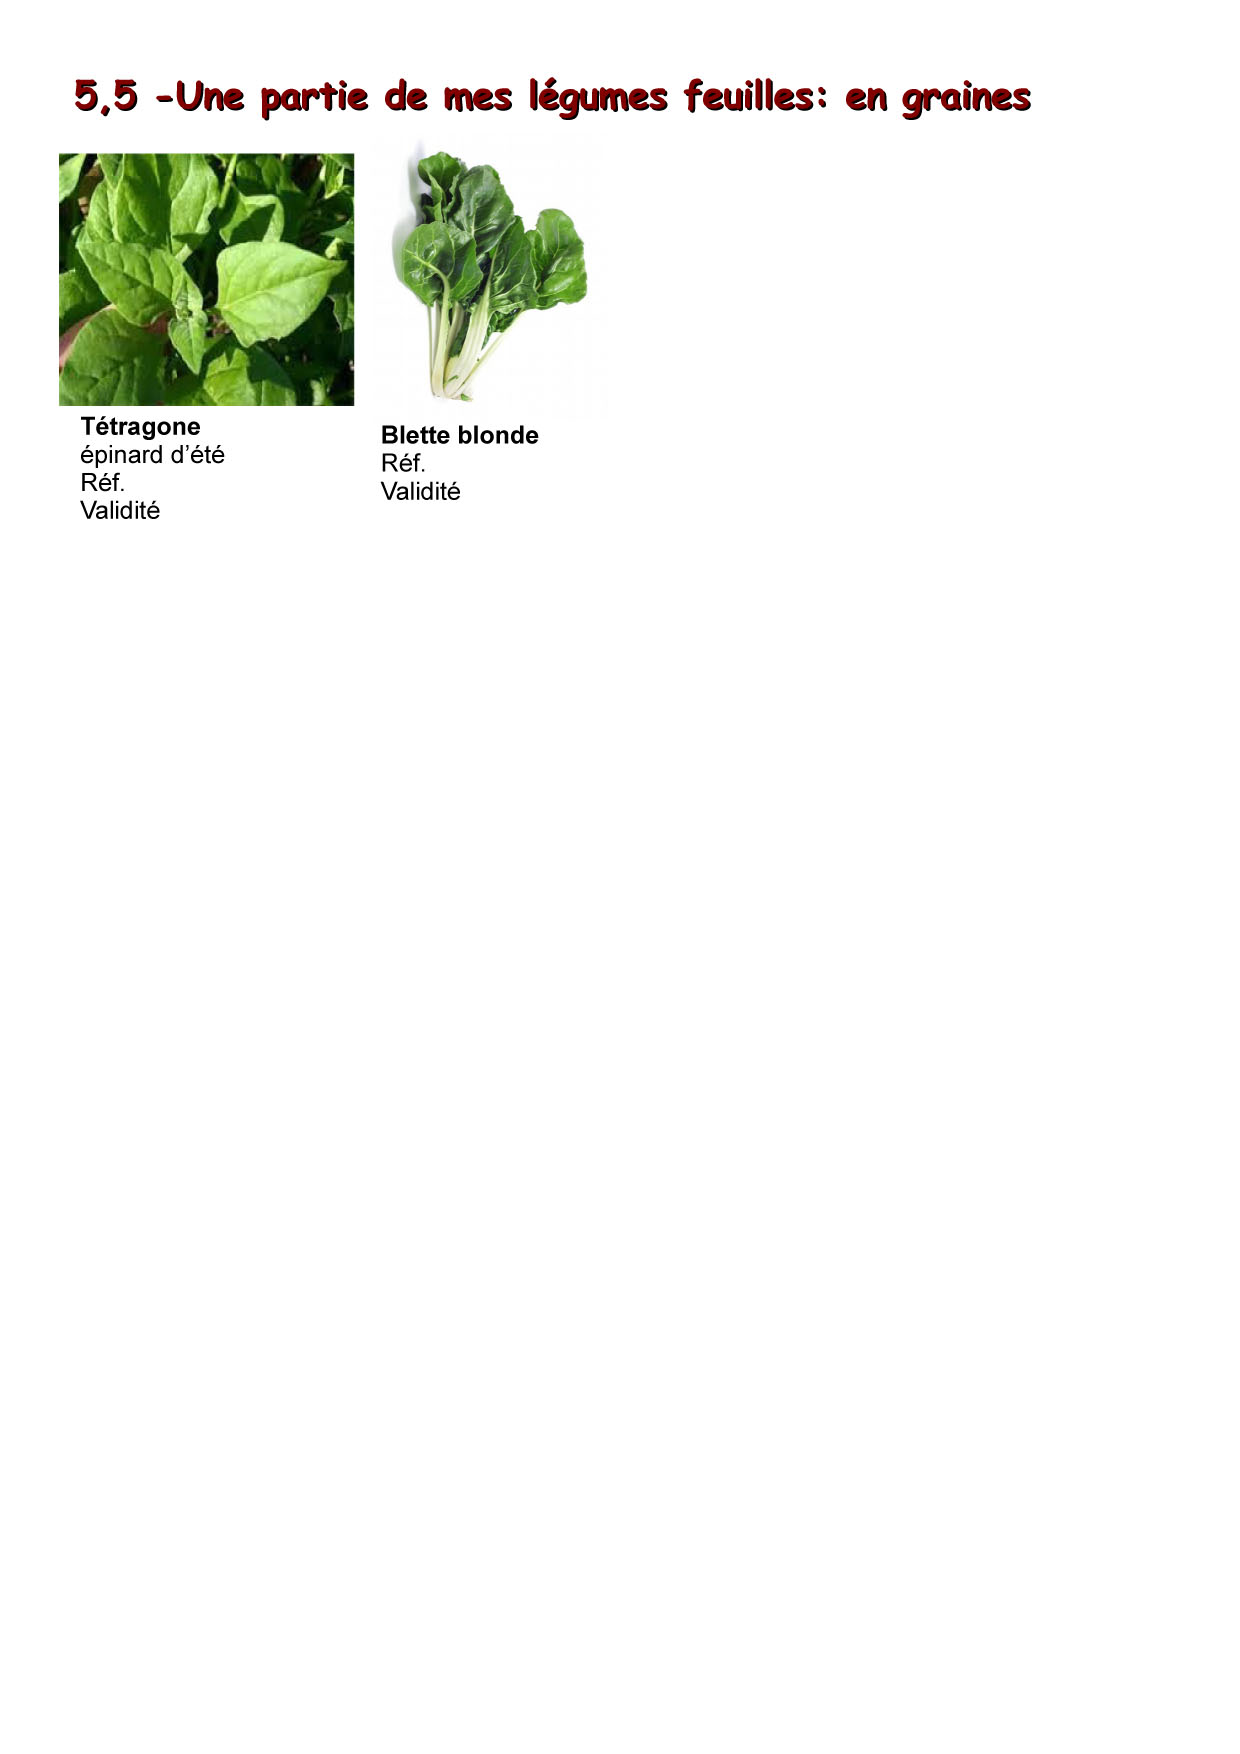 5.5 Légumes feuilles